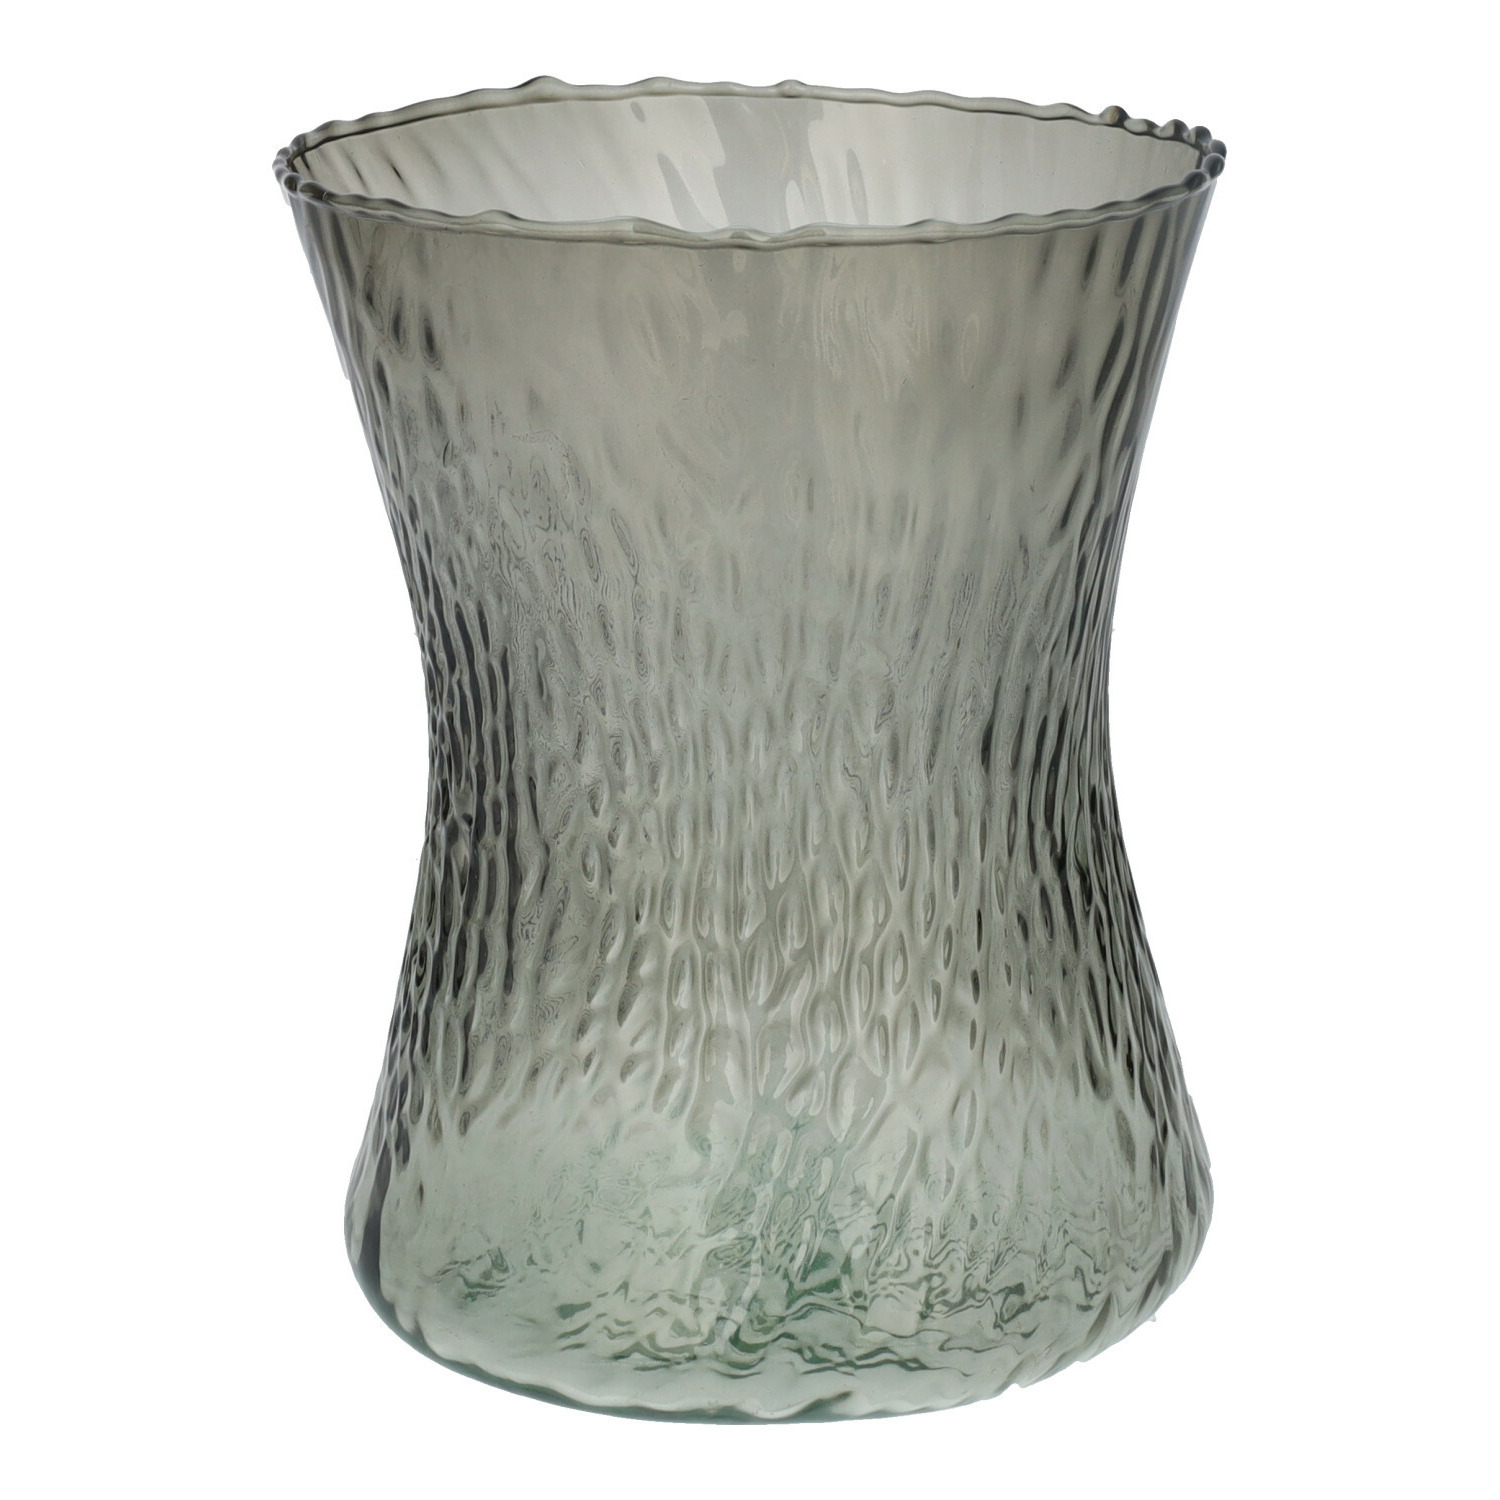 Merkloos Bloemenvaas Dion - grijs transparant glas - D16 x H20 cm - decoratieve vaas - bloemen/takken -